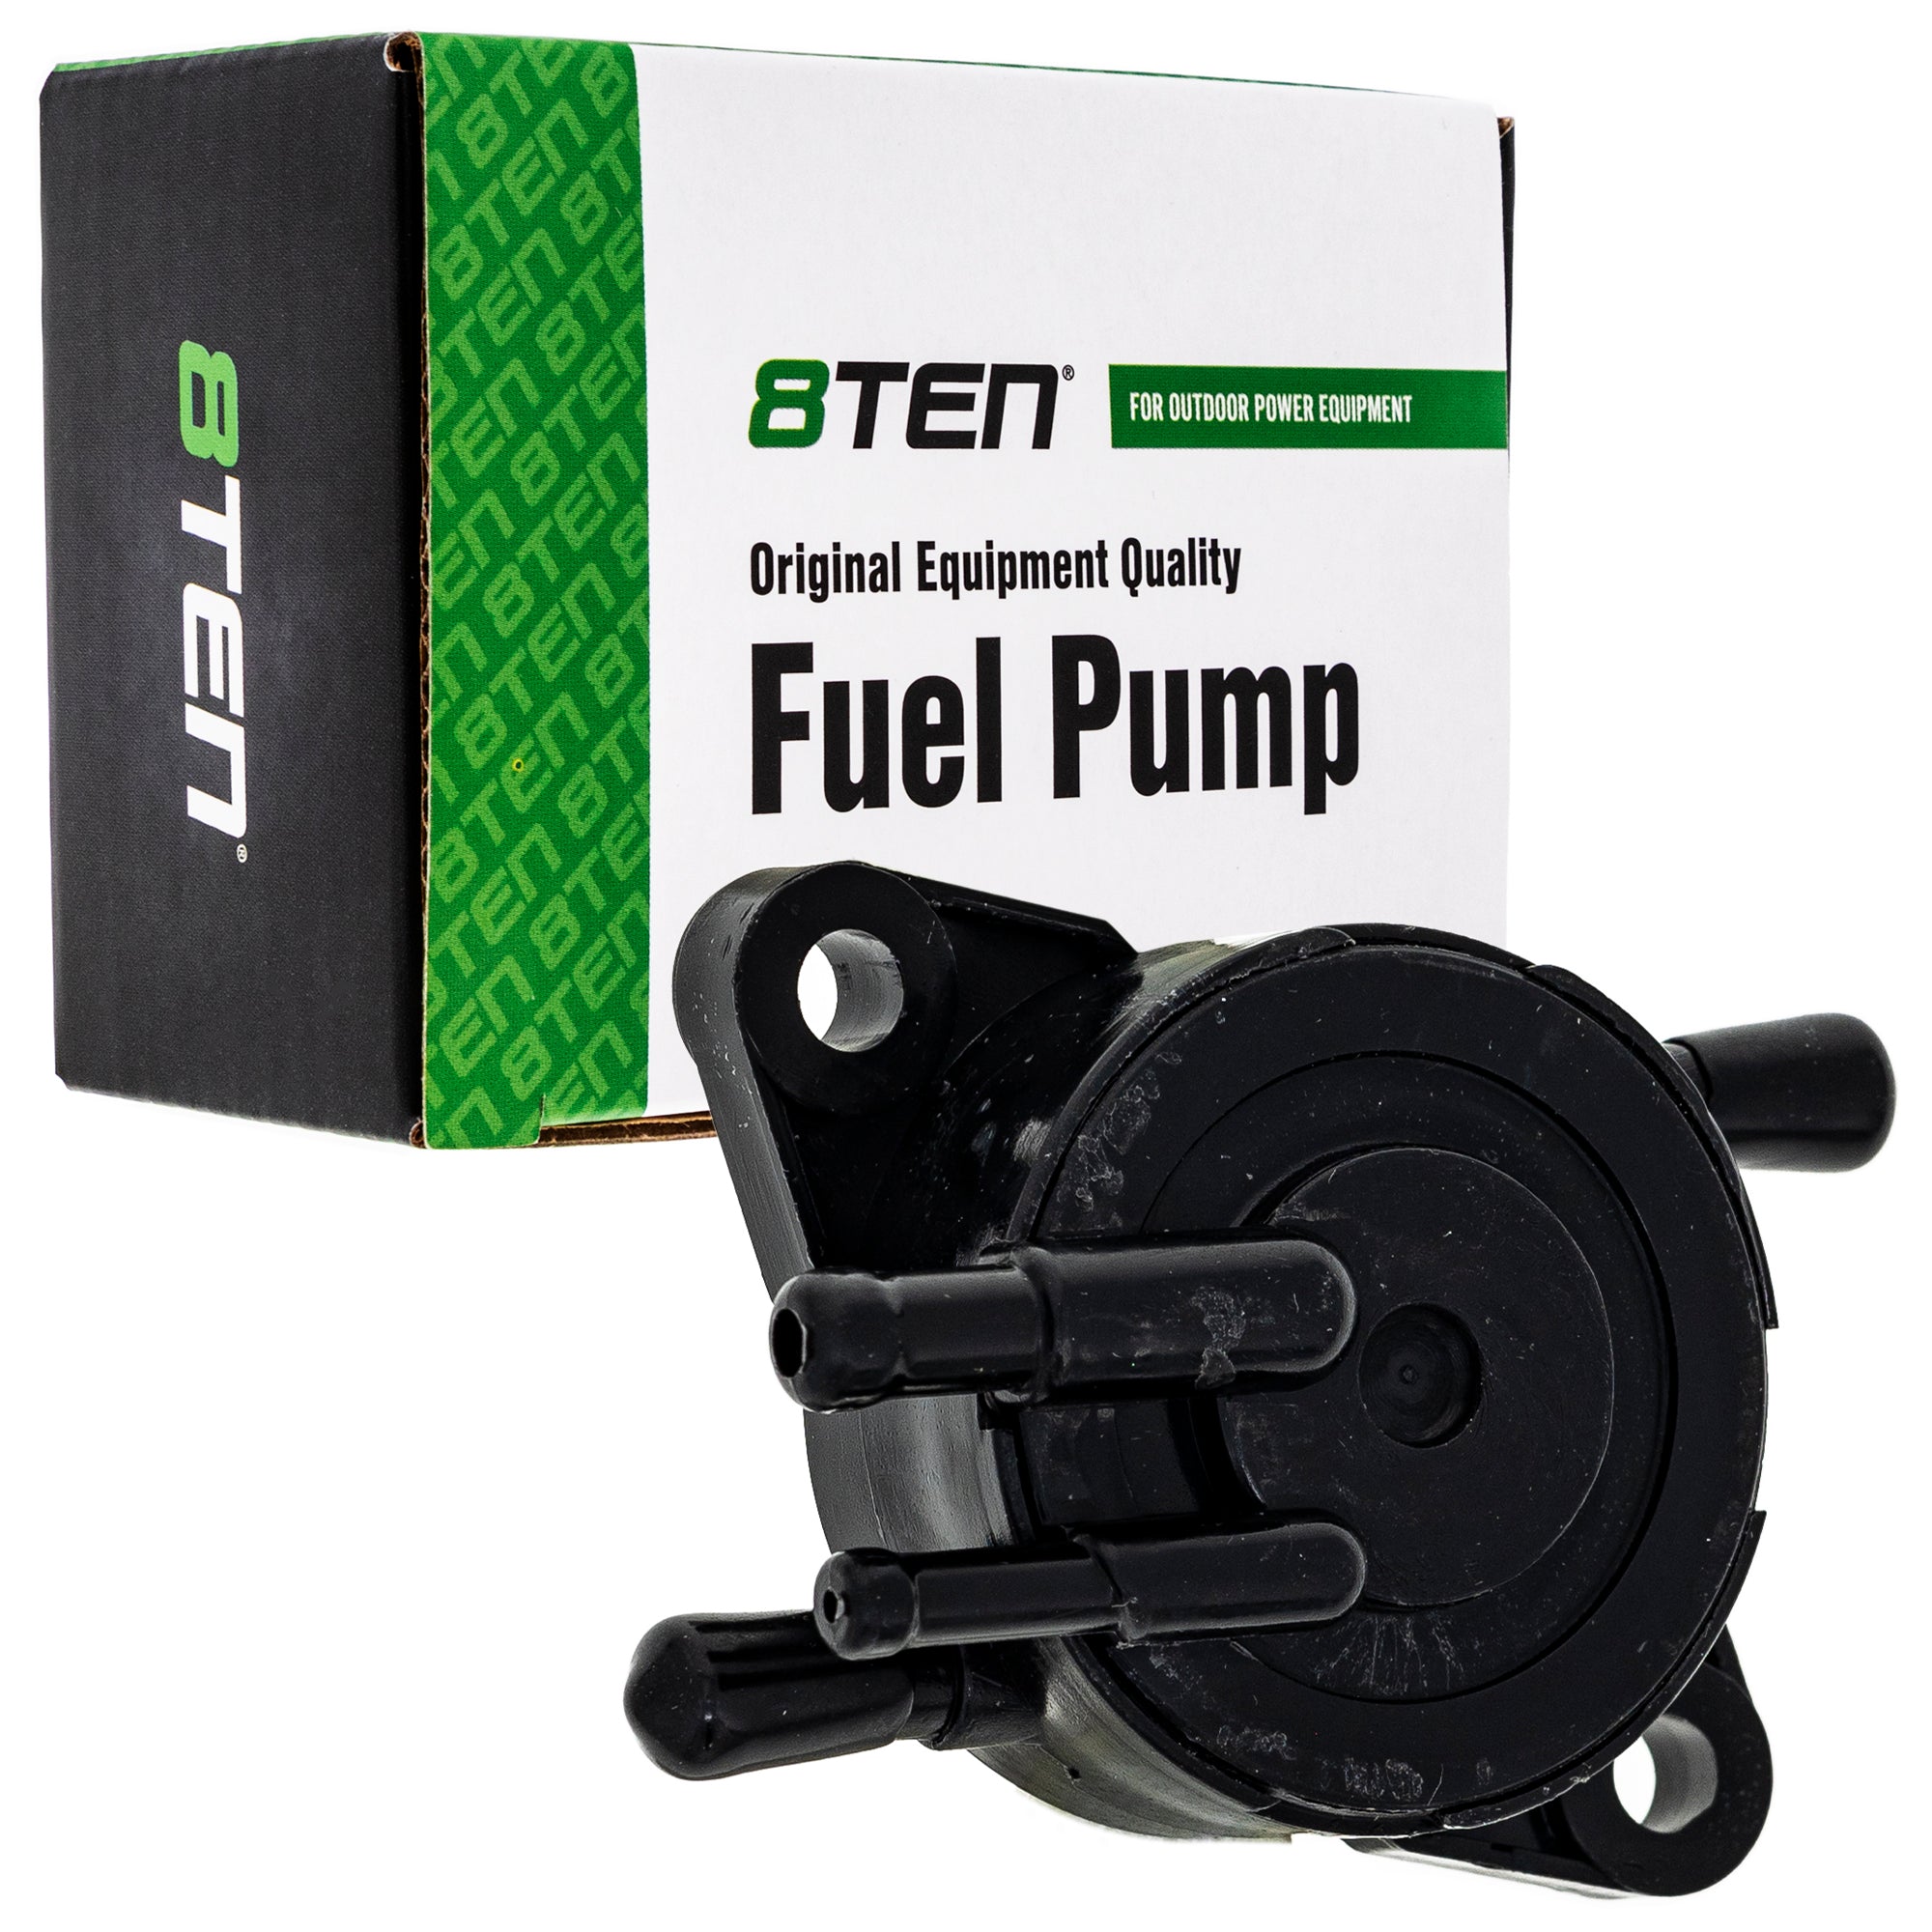 Fuel Pump Assembly for zOTHER MTD Cub Cadet Troy-Bilt EB10000 8TEN 810-CFP2254A